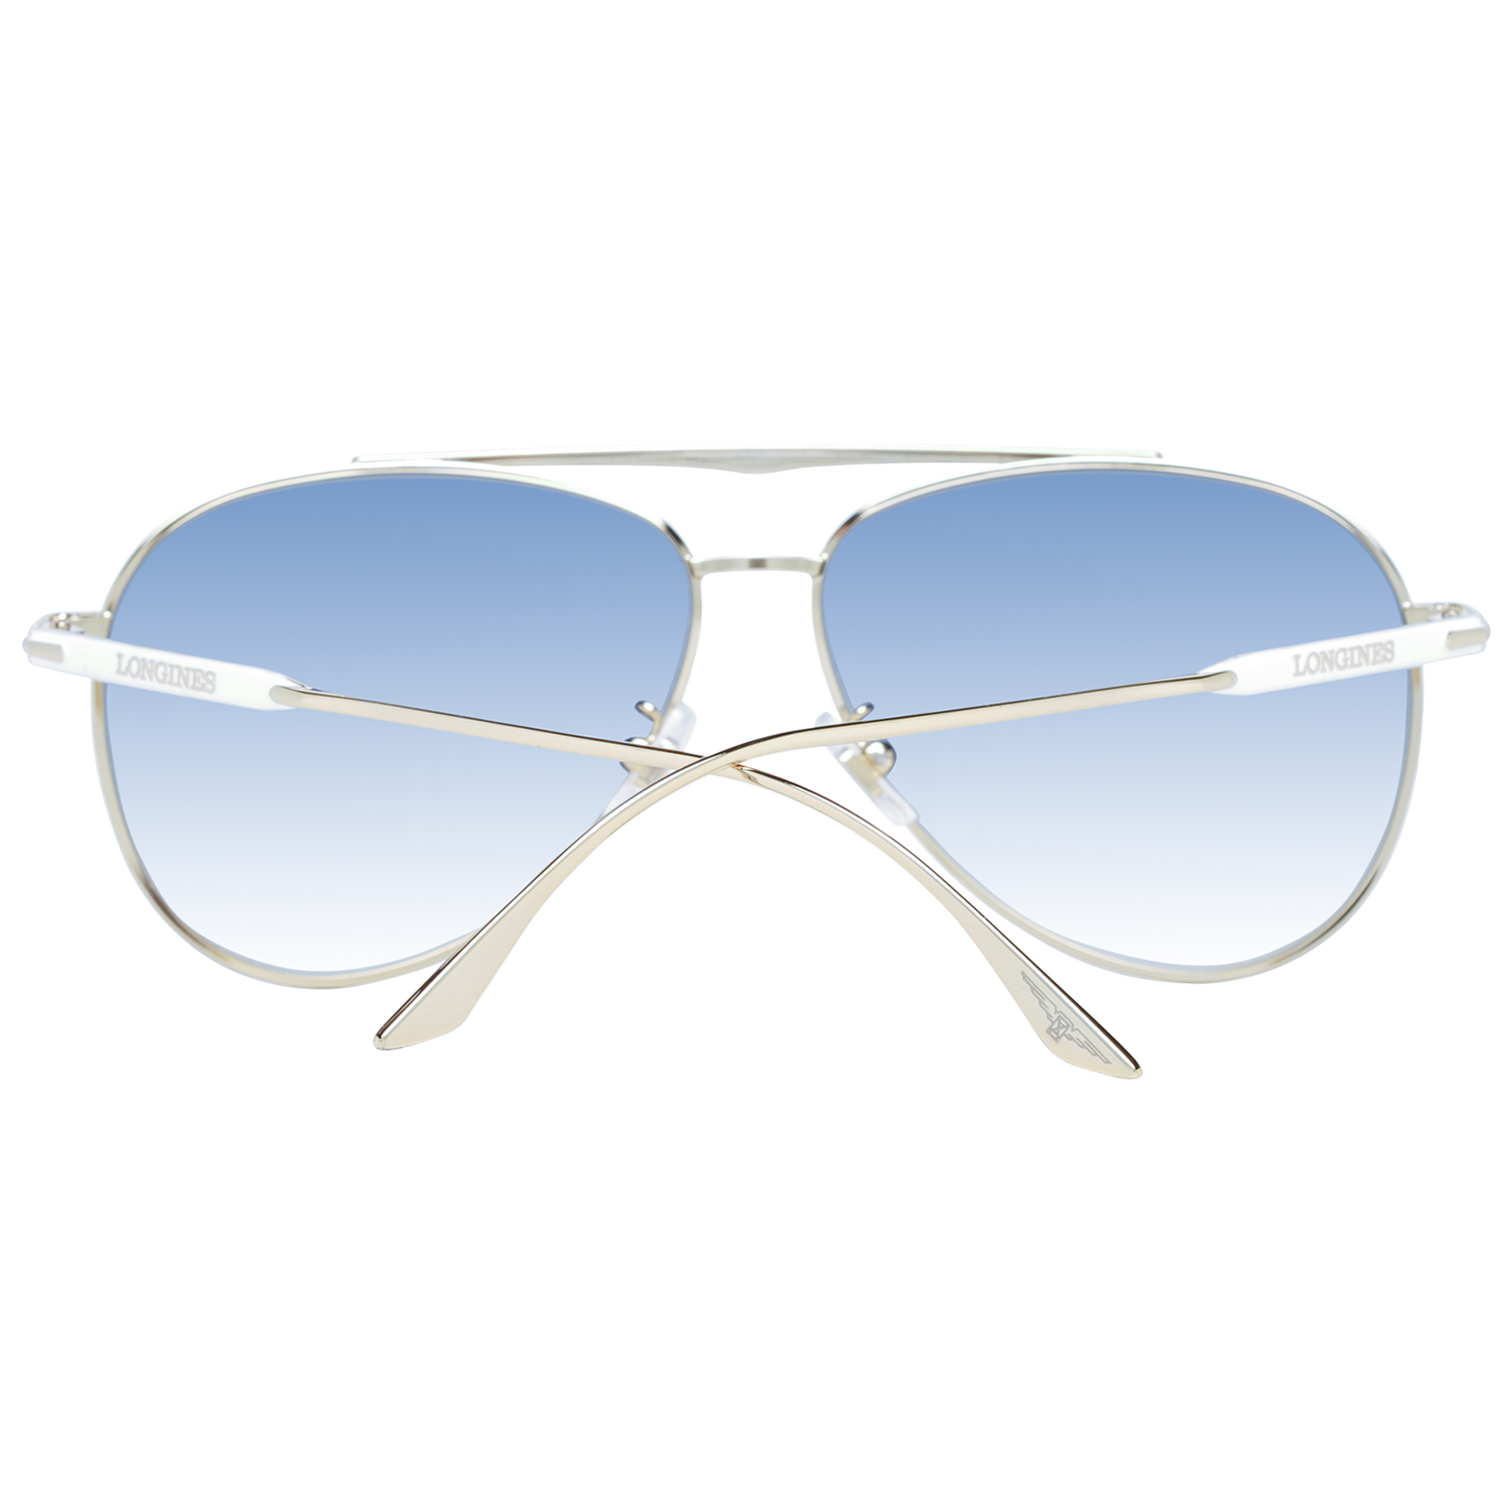 Longines Sunglasses Longines Sunglasses LG0005-H 30X 59mm Eyeglasses Eyewear UK USA Australia 